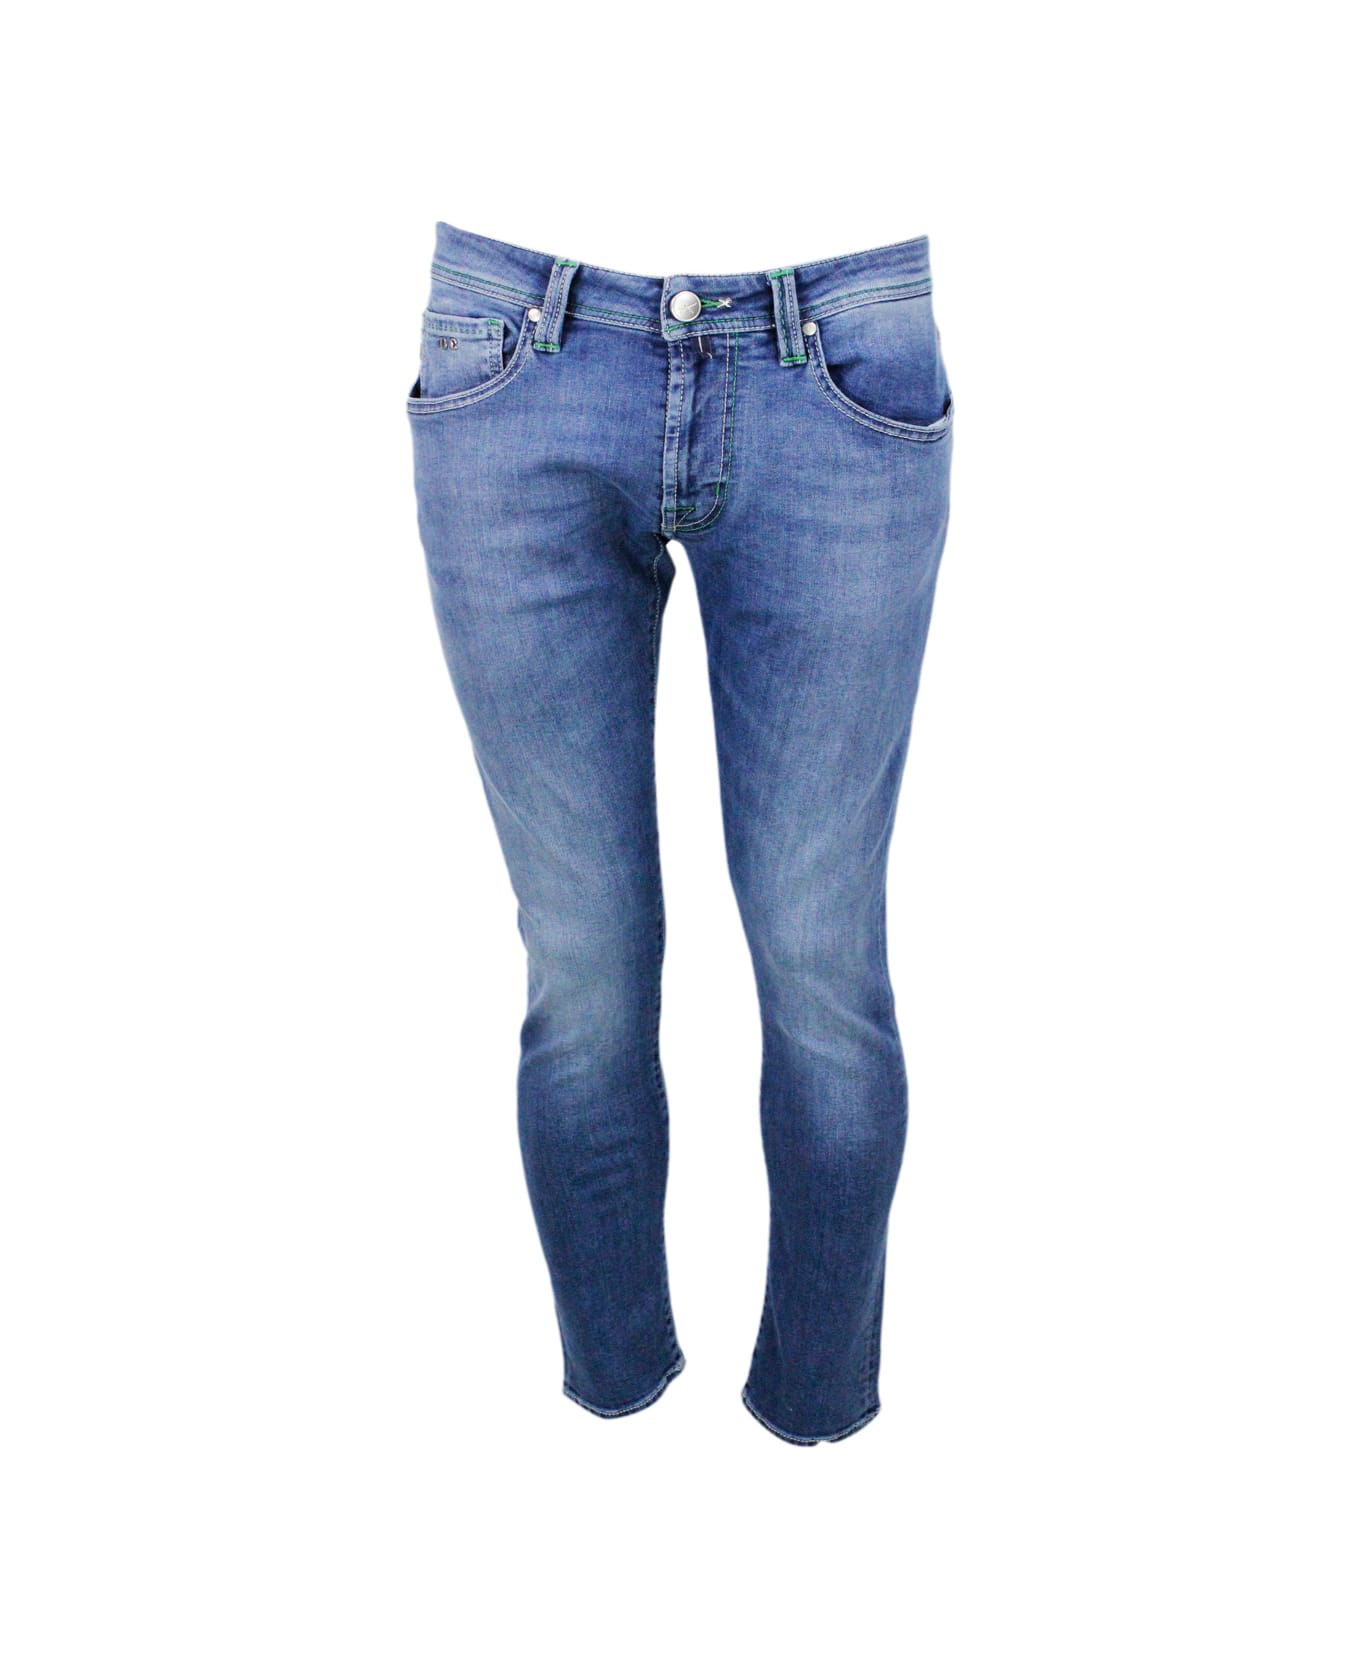 Sartoria Tramarossa Leonardo Zip Montecarlo Trousers In 5-pocket Super Stretch Selvedge Denim With Tone-on-tone Tailored Stitching And Leather Tag And Zip Closure - Denim